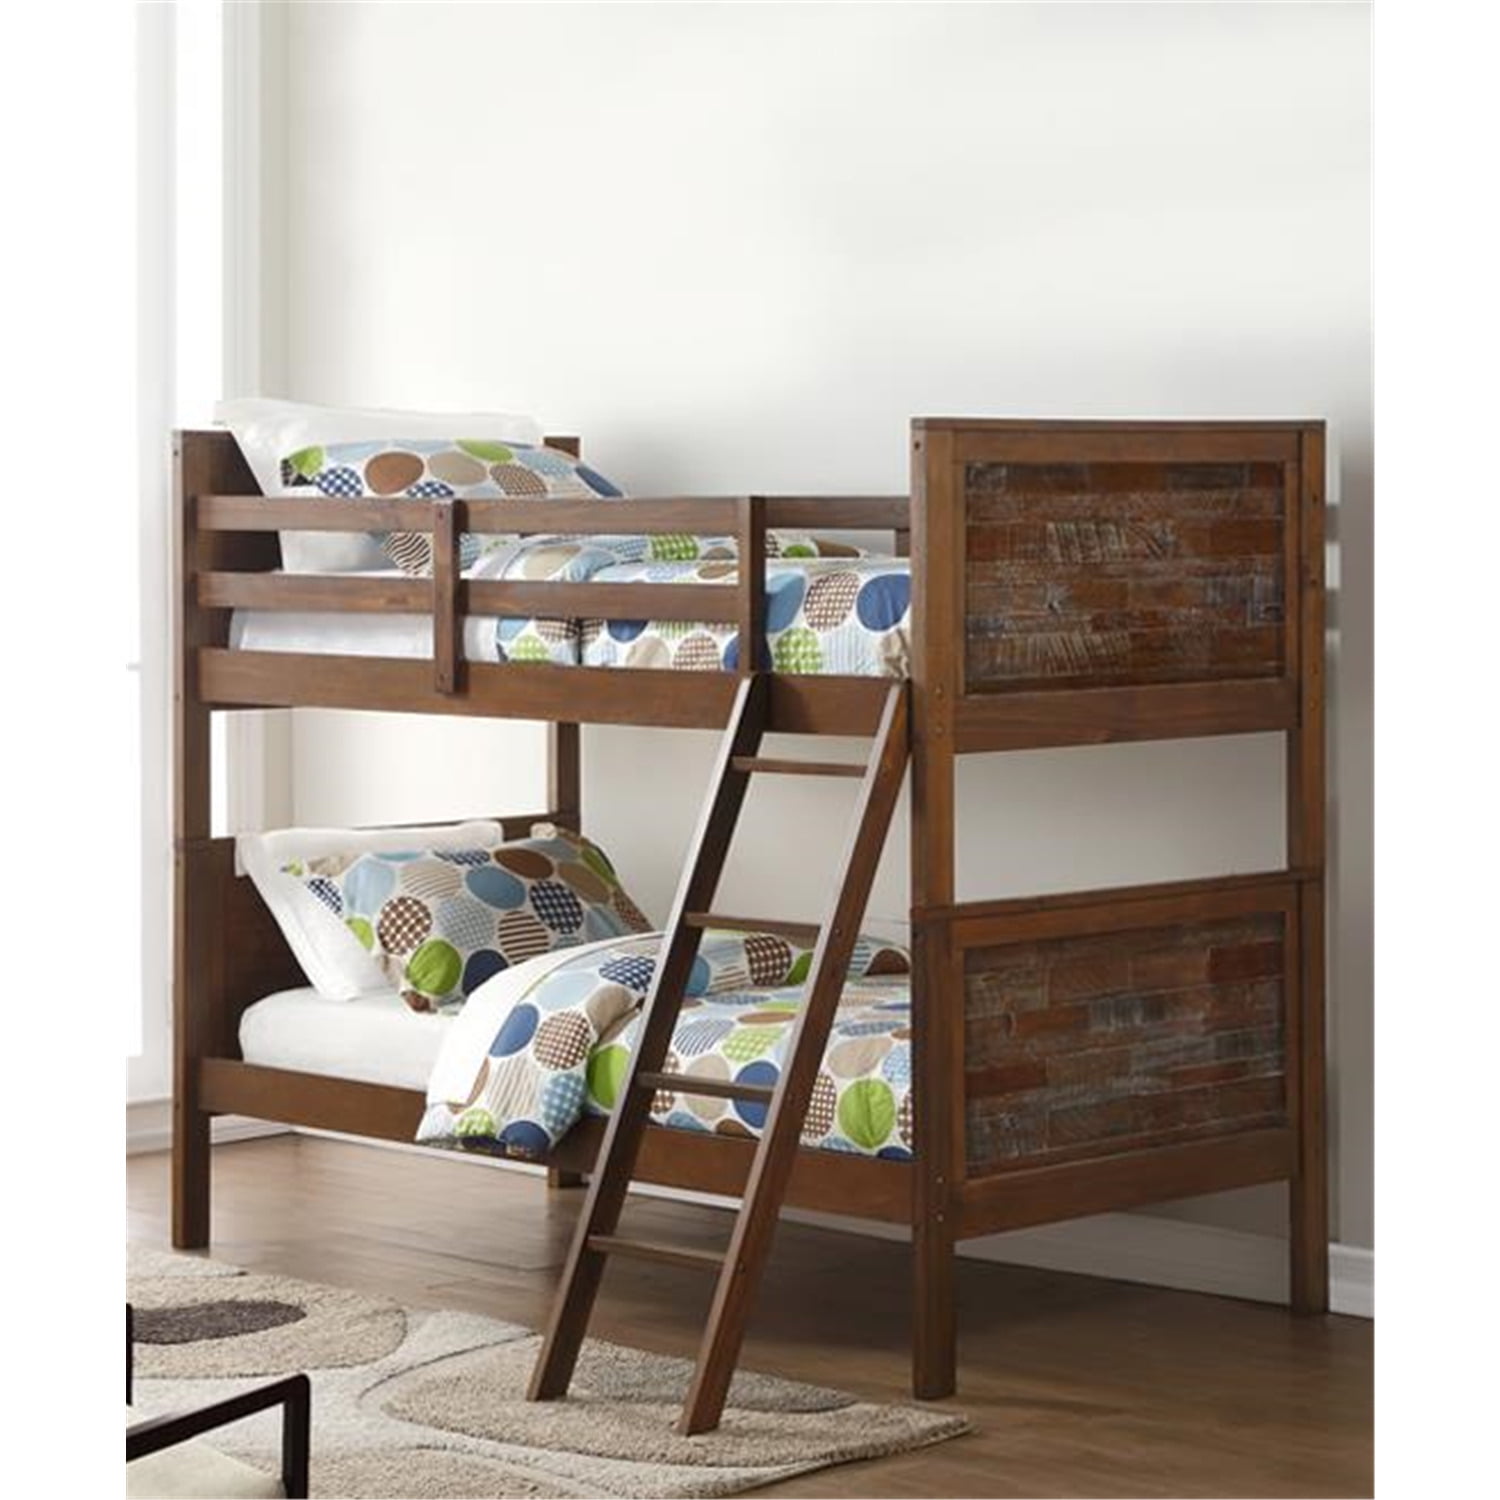 Donco Kids Artesian Bunk Bed Color, Artisan Bunk Bed